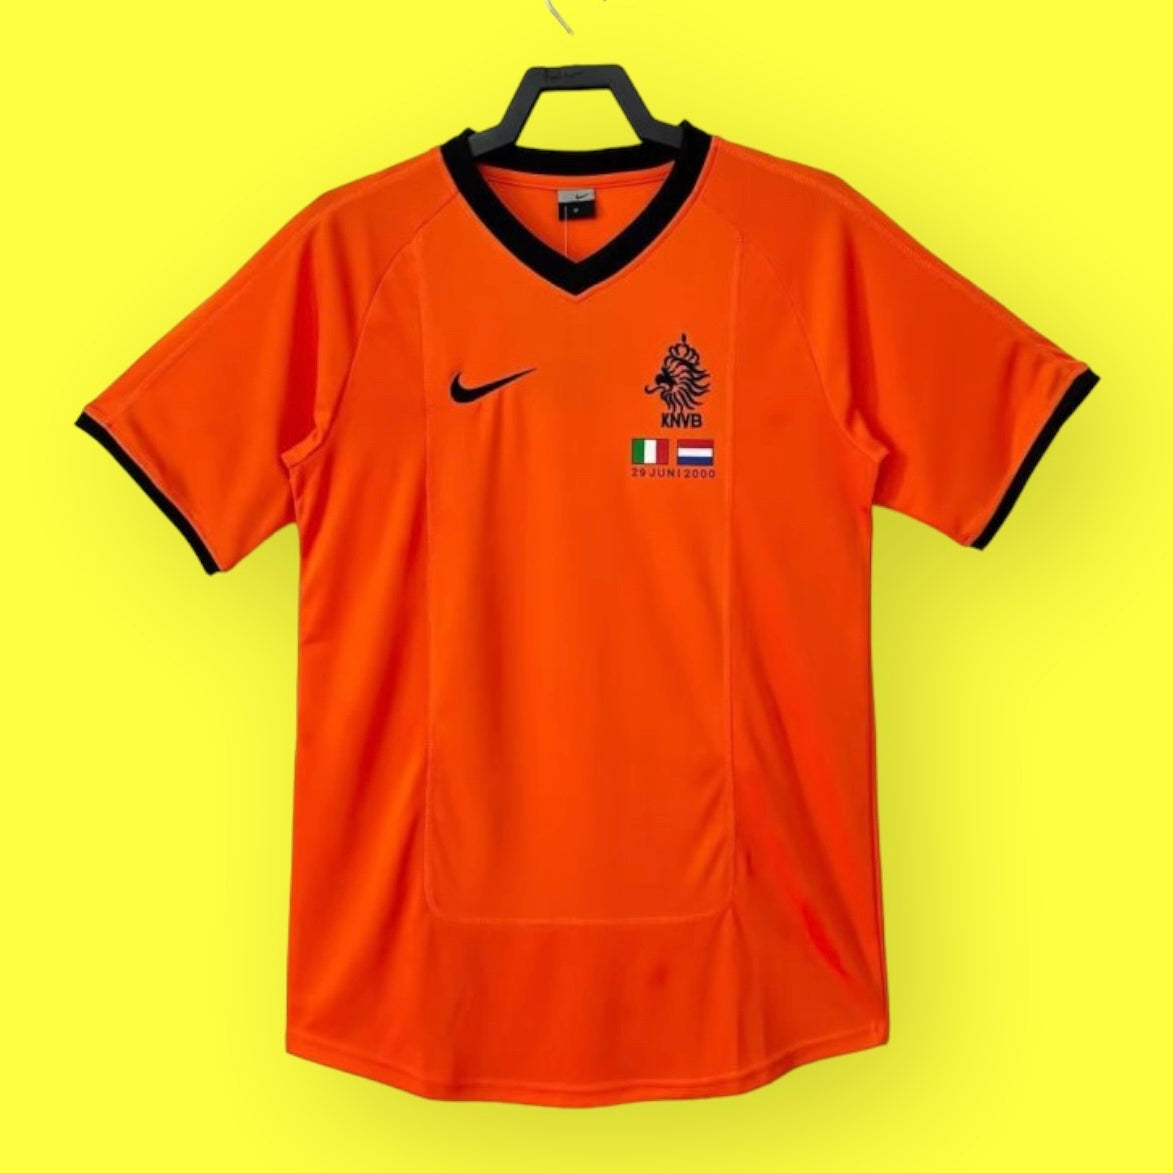 Netherlands Home vs Italy 2000